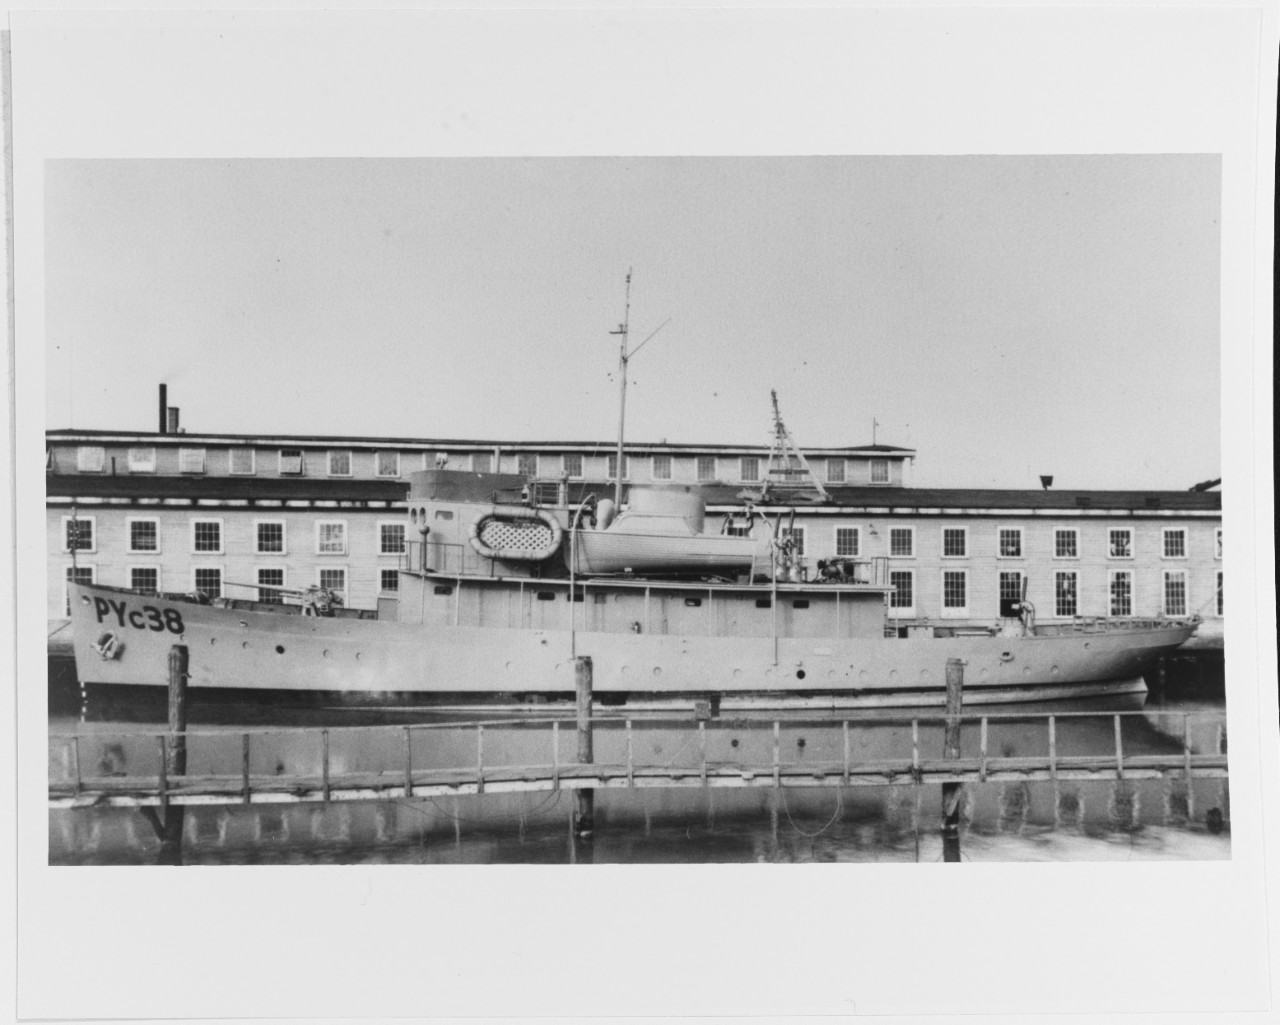 USS CAROLITA (PYc-38)